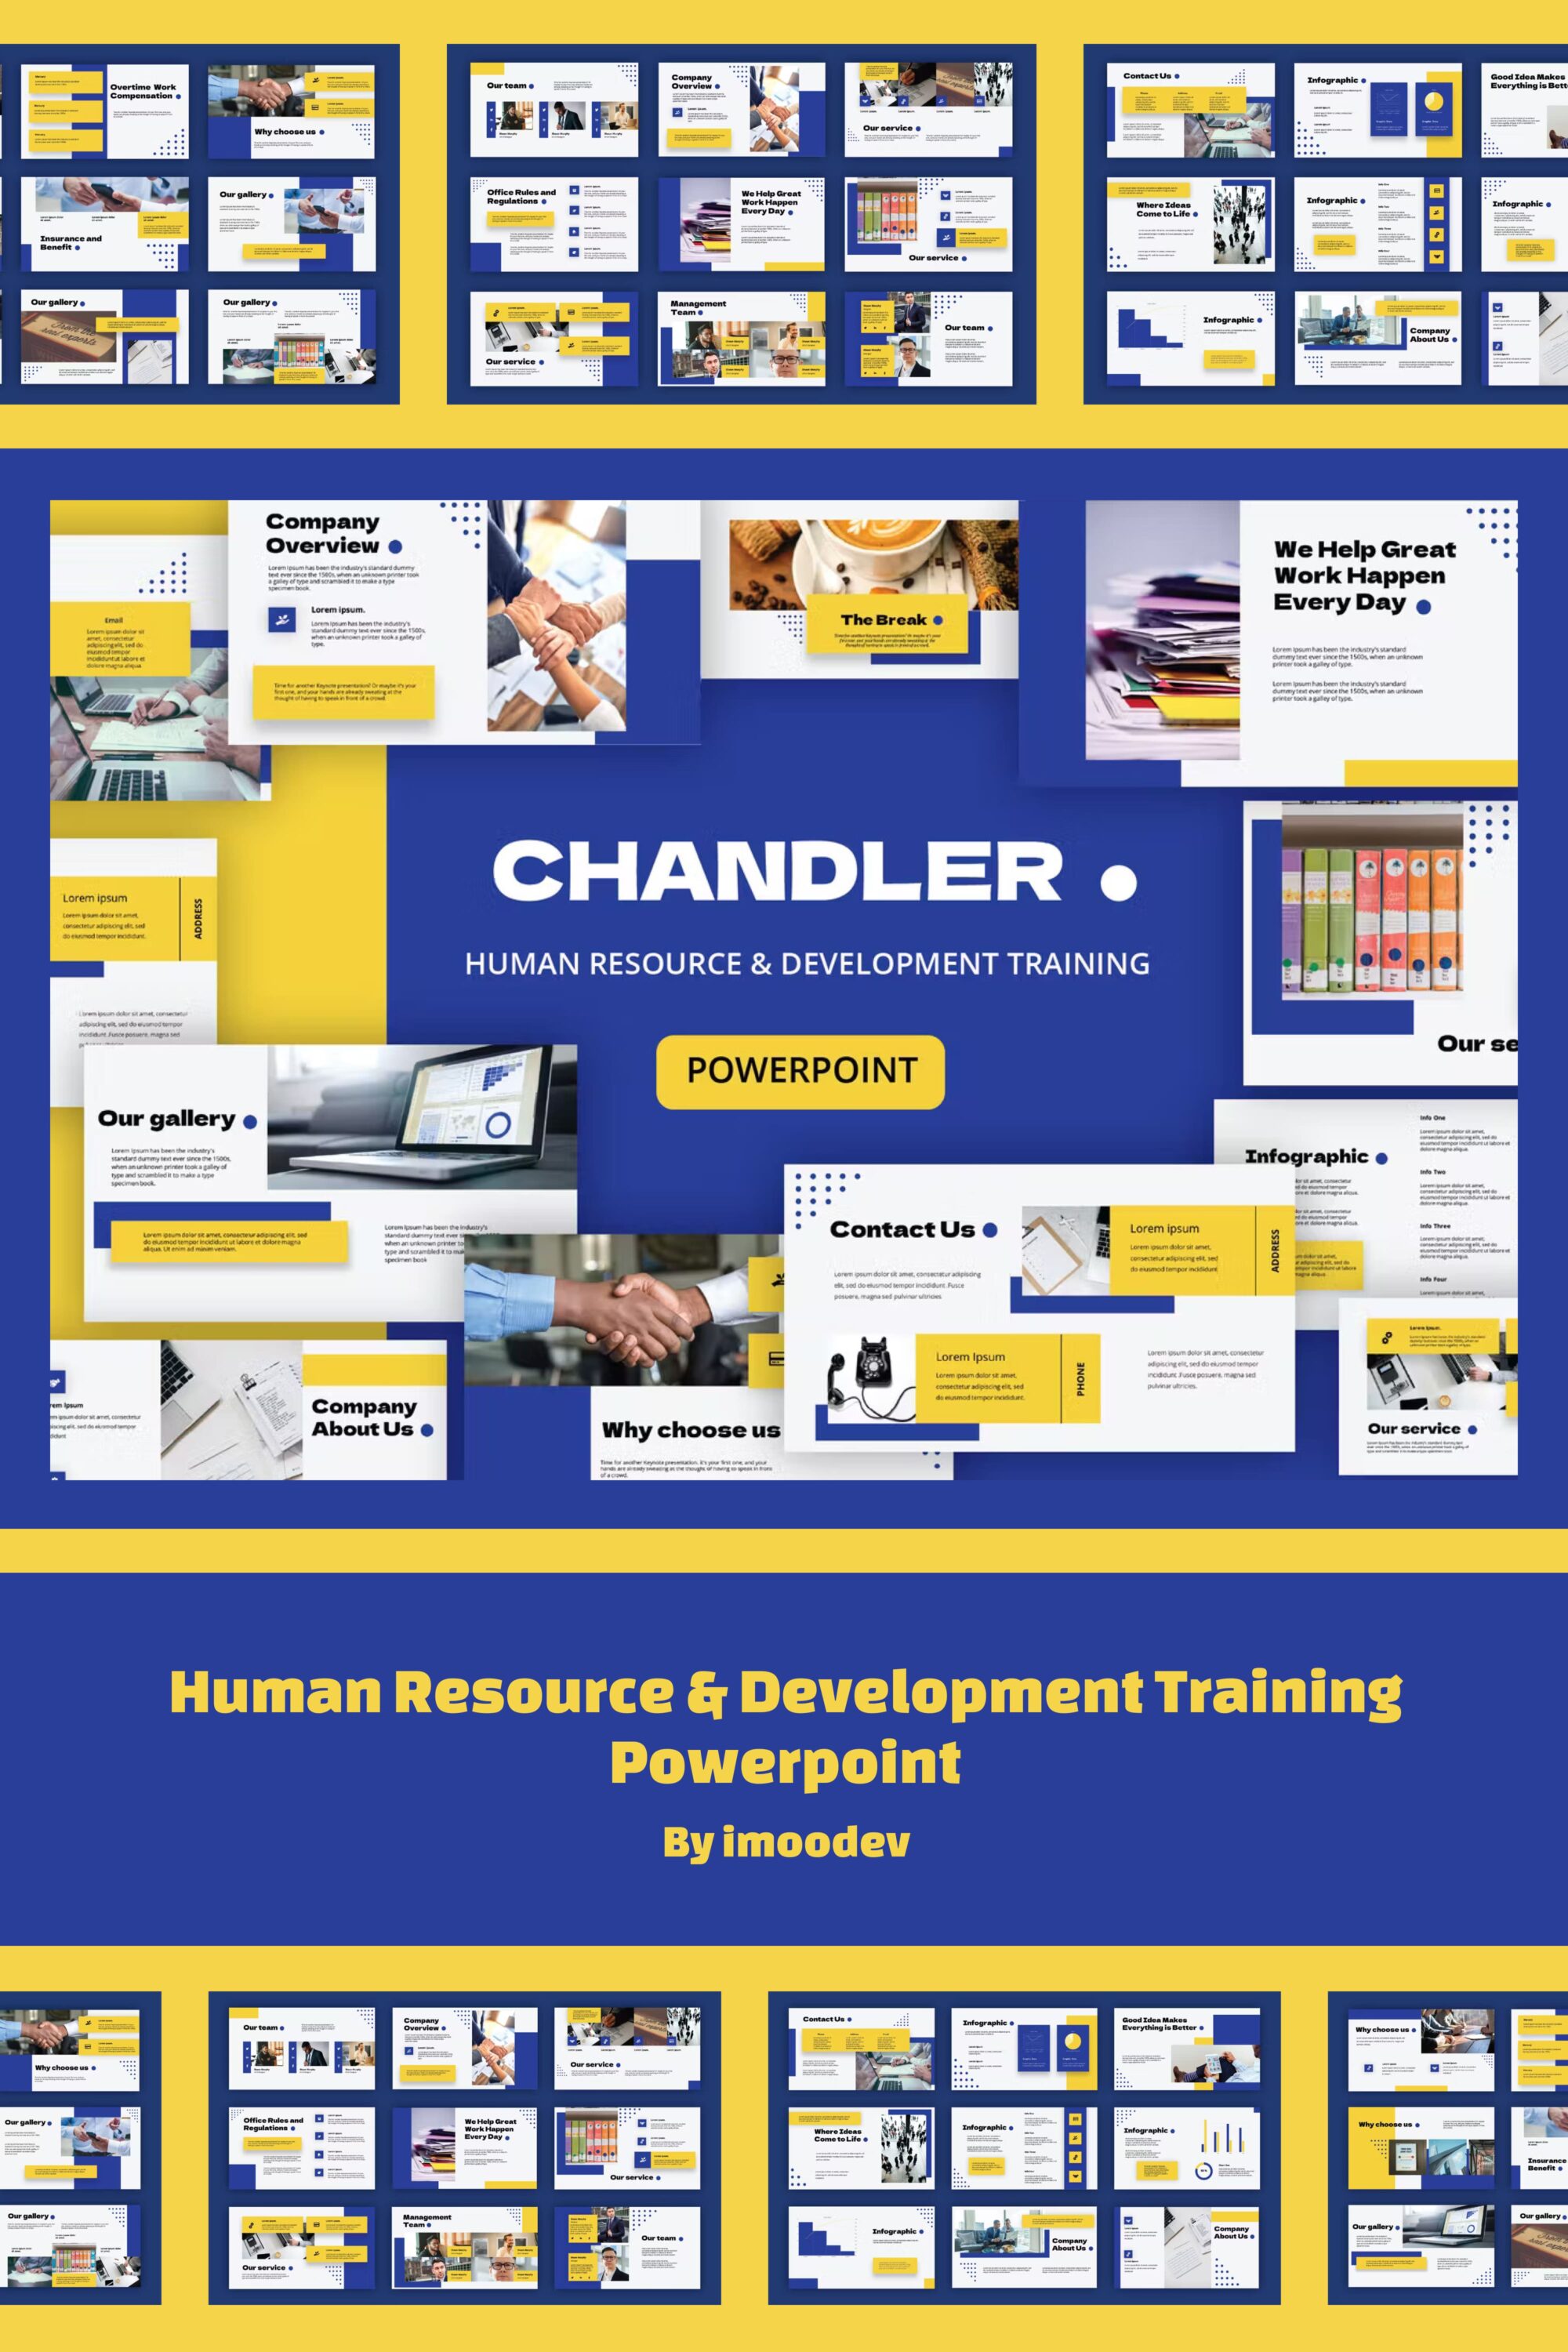 human resource development training powerpoint 03